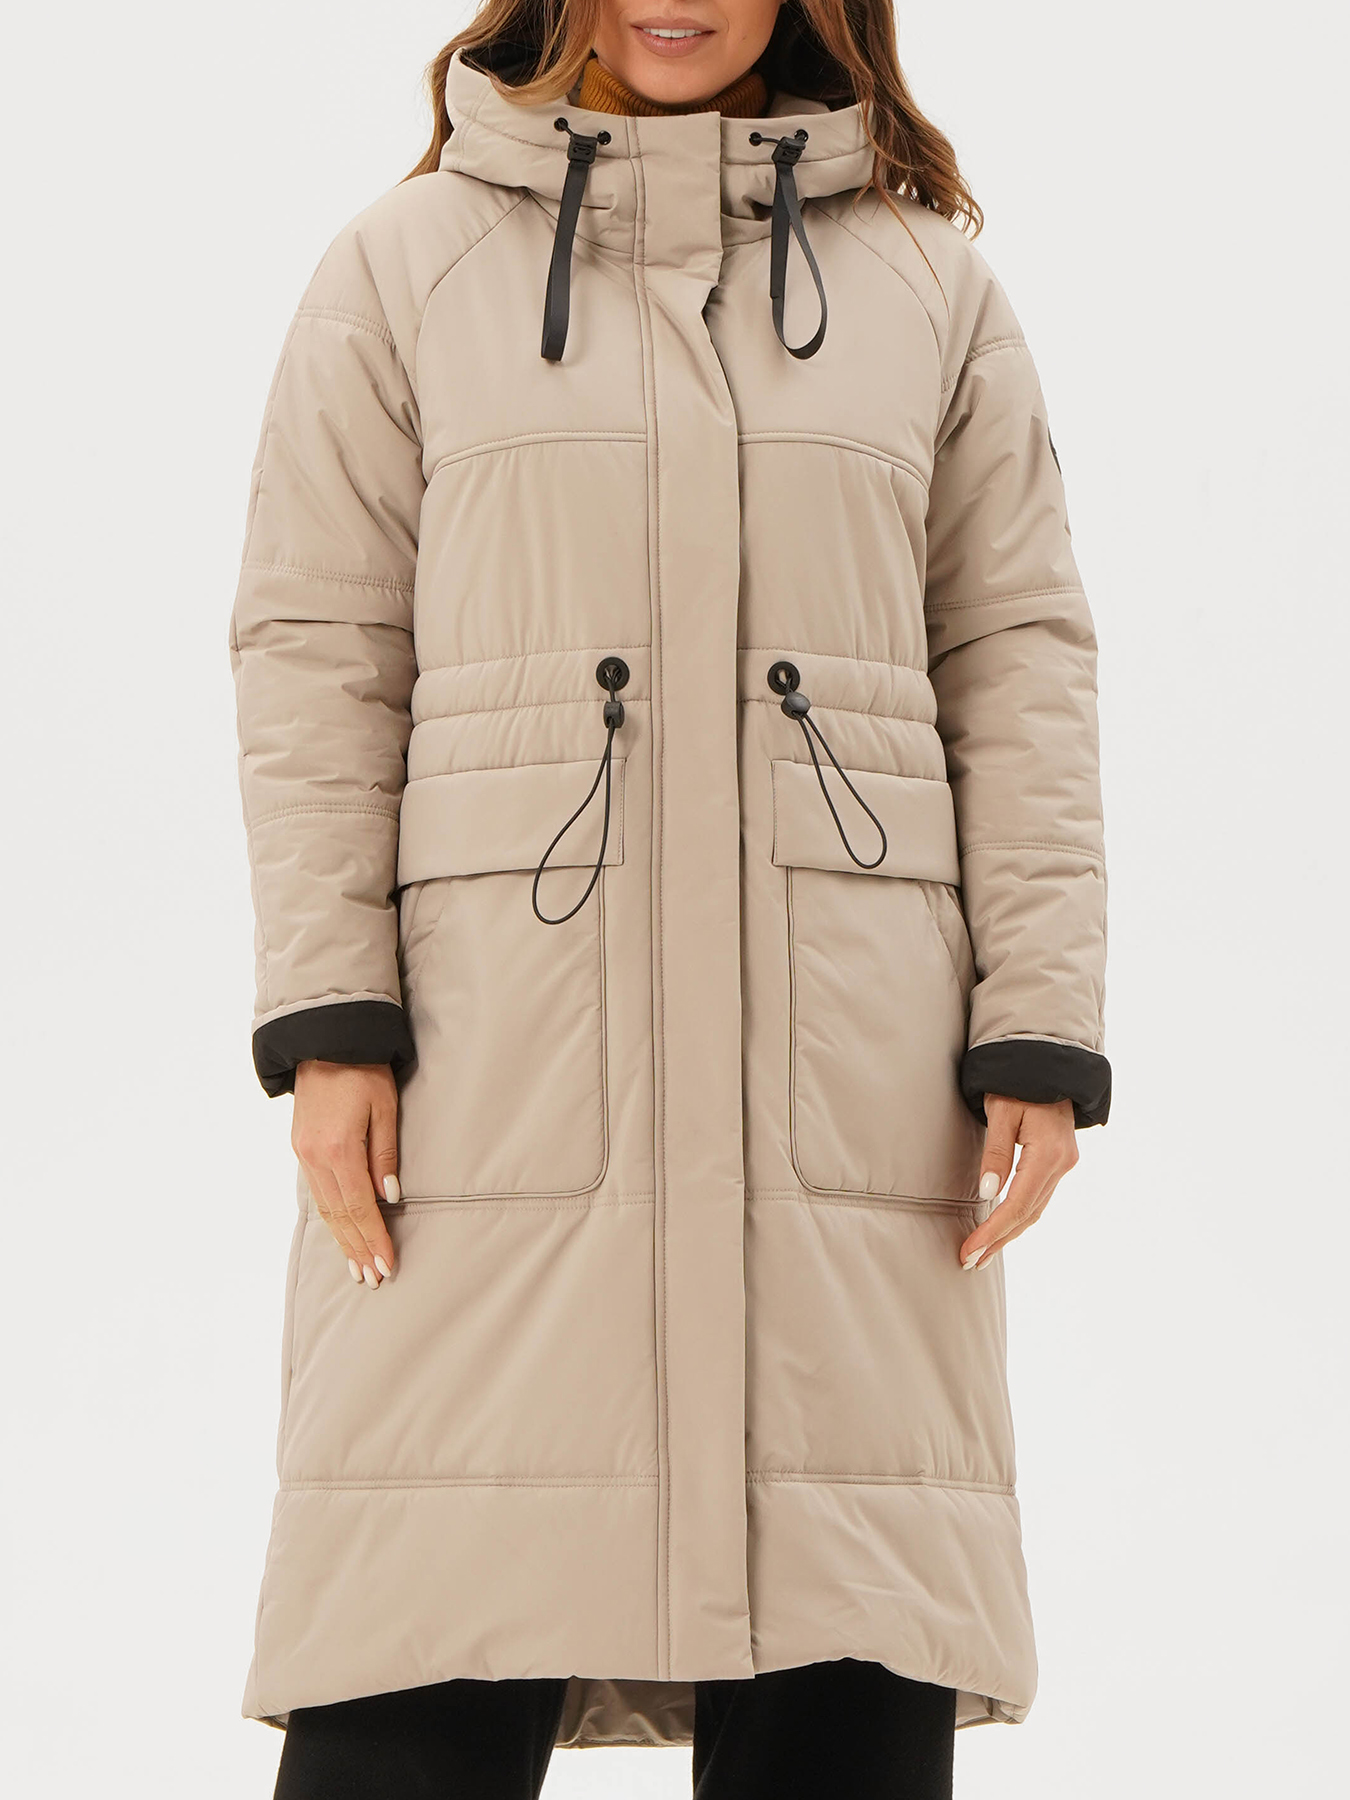 Пальто зимнее Maritta 433564-025, цвет бежевый, размер 48 - фото 1